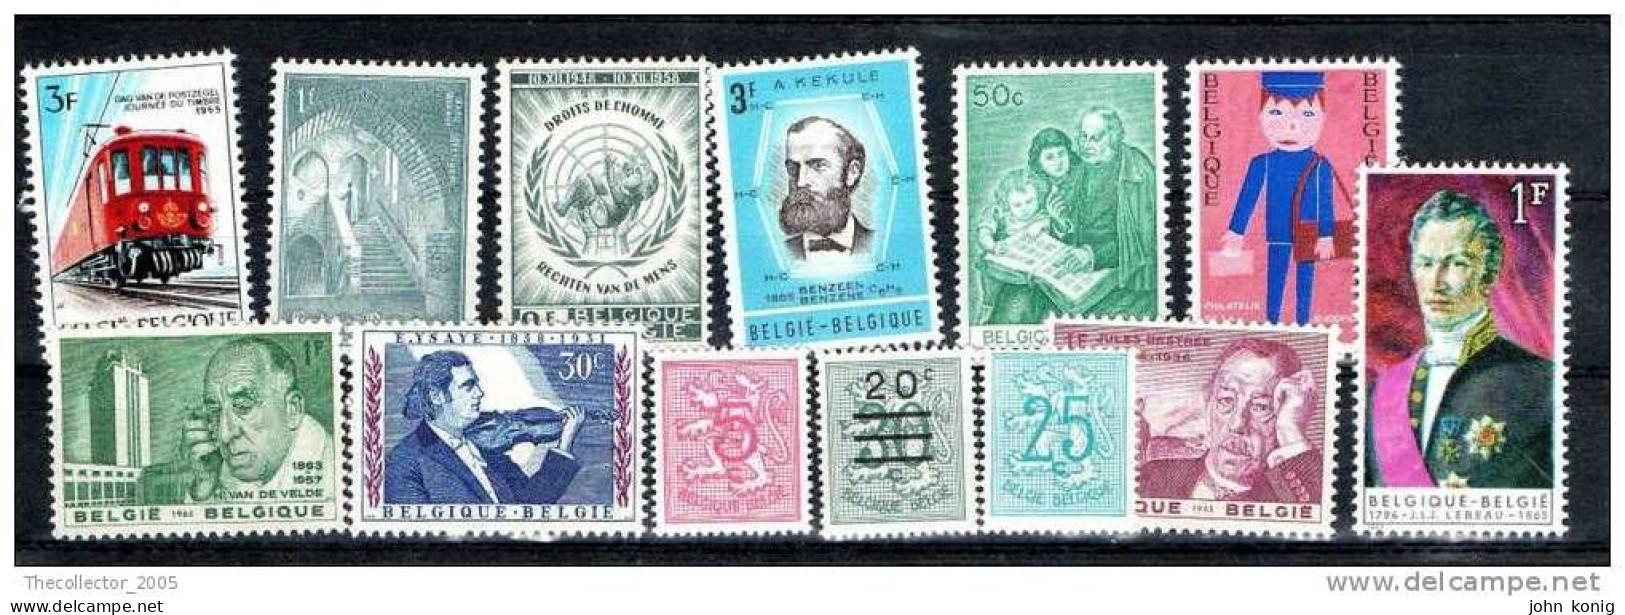 Belgio - Belgie - Belgique - Stamps Lot - New - Neuf - Superbe Lot - Collezioni